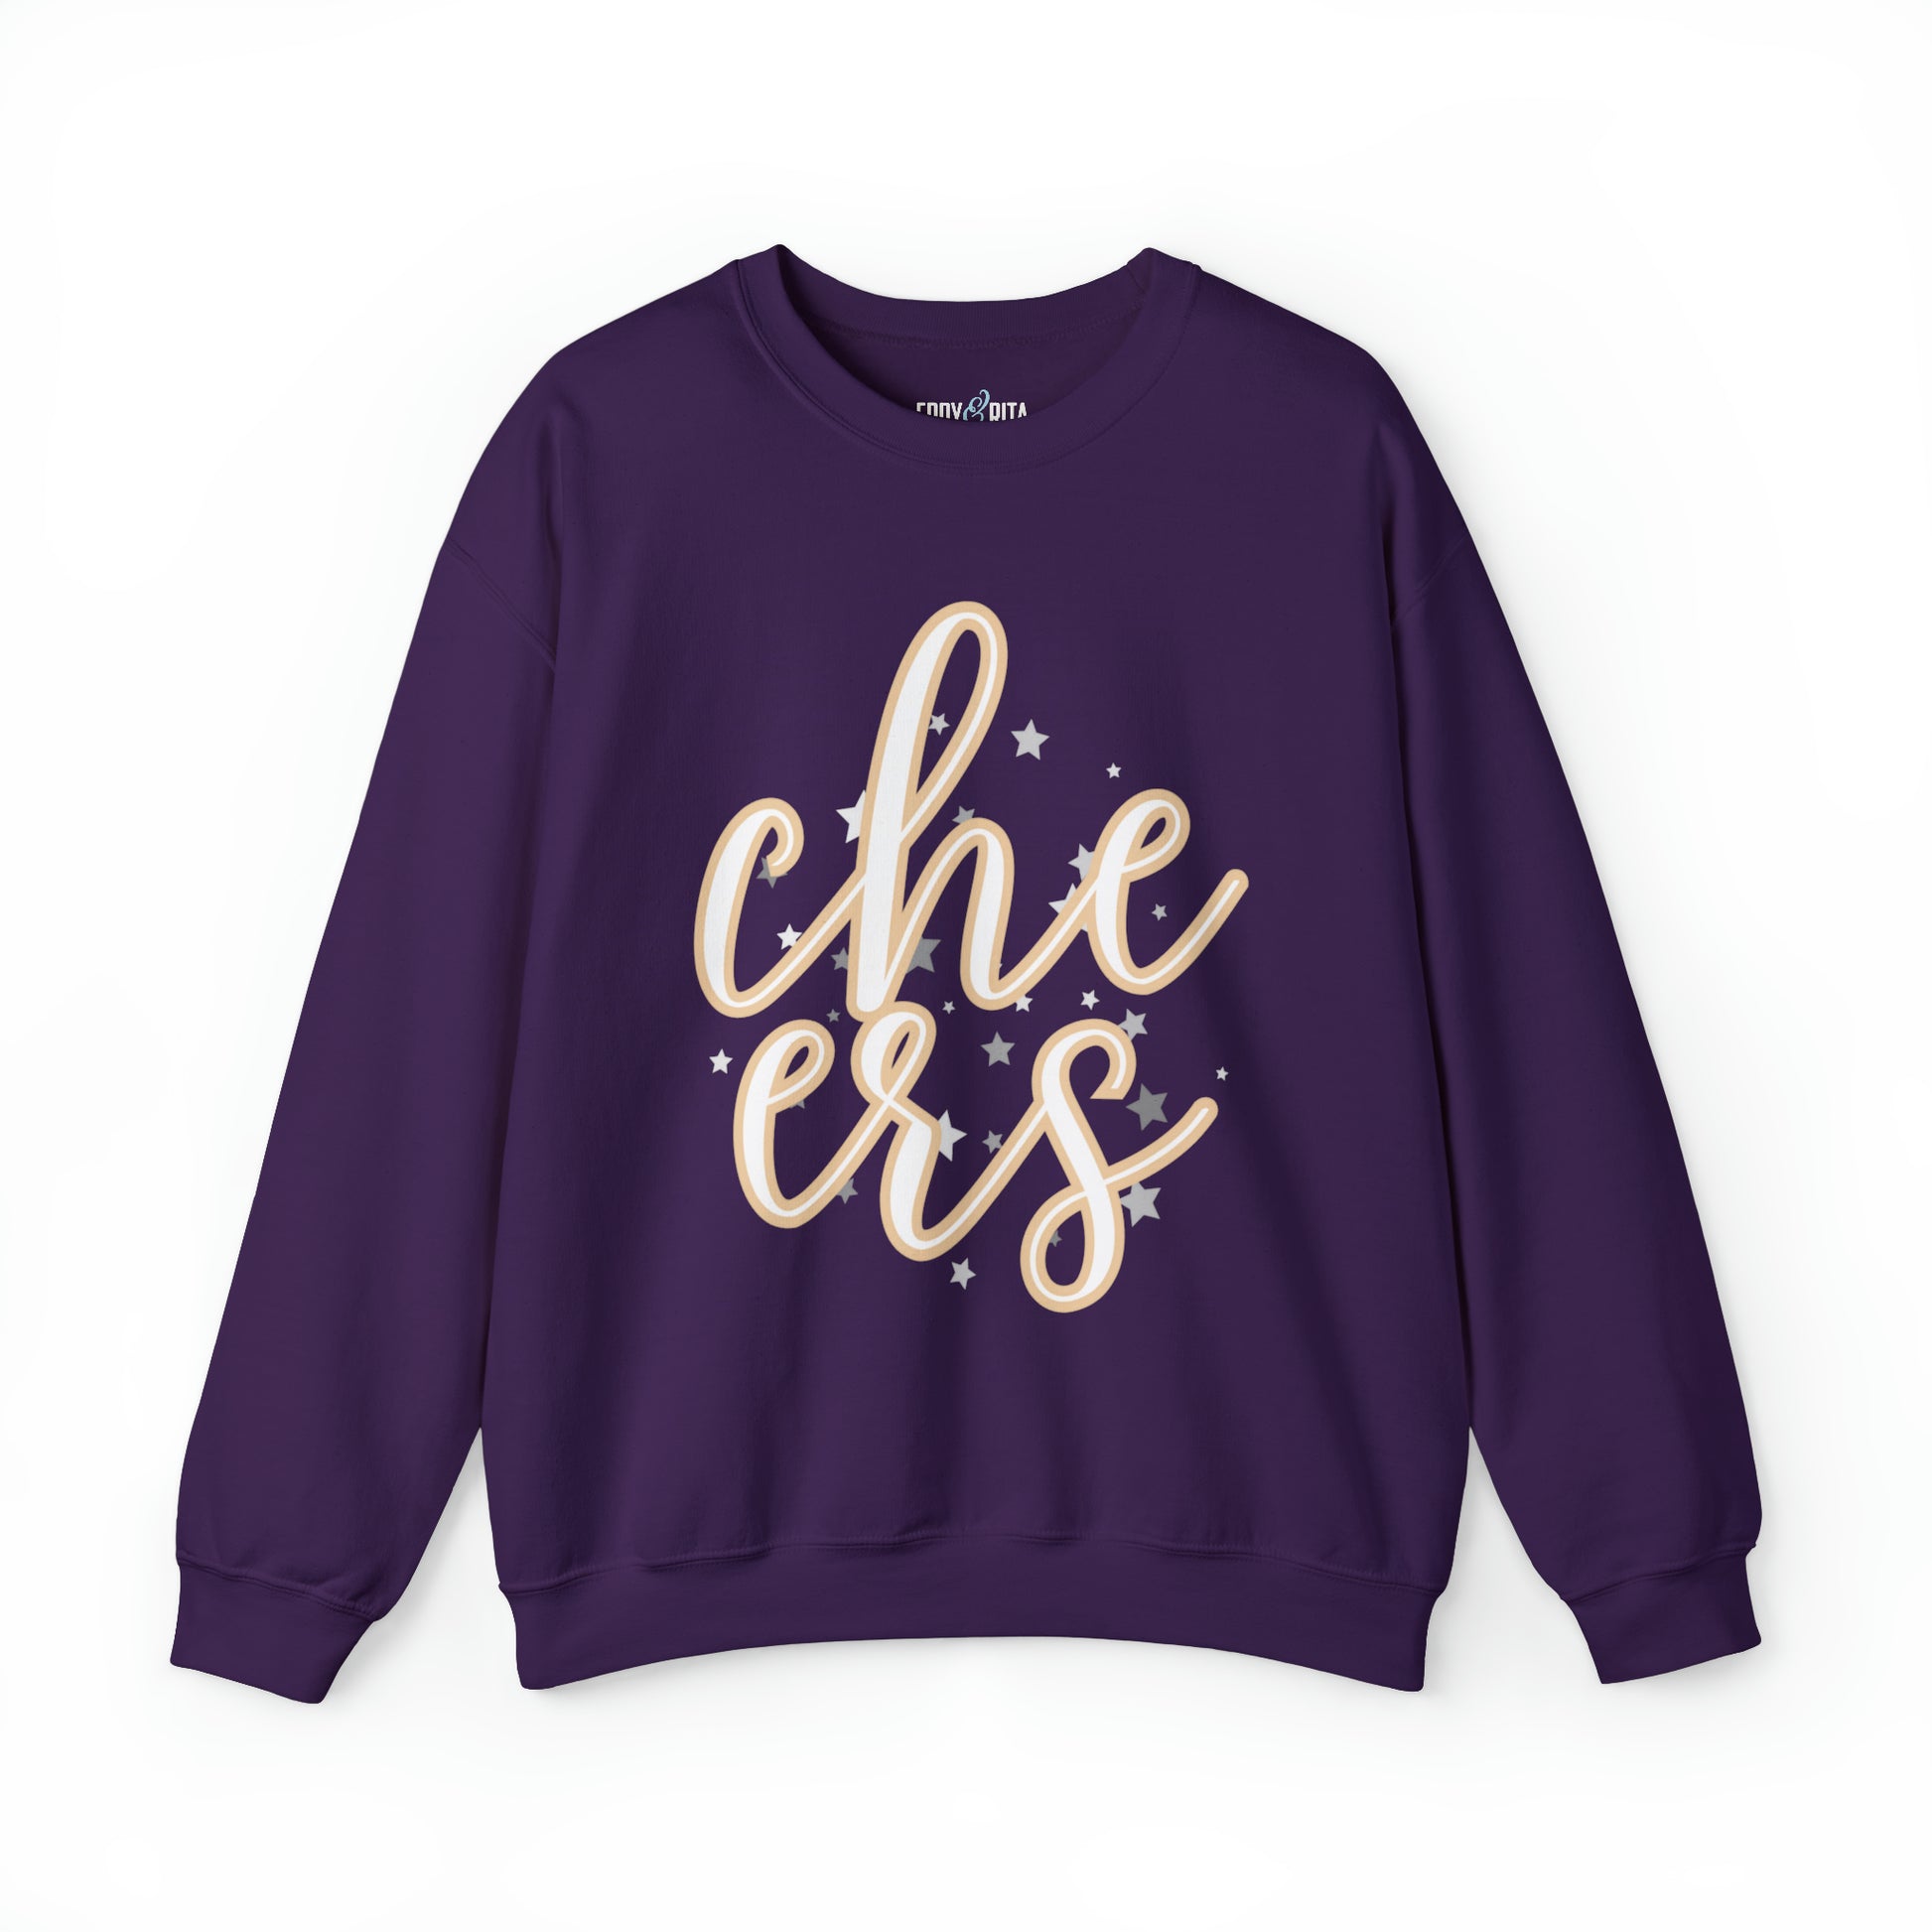 Casual Cheers: Women's Comfort Sweatshirt for Effortless Style - Eddy and Rita